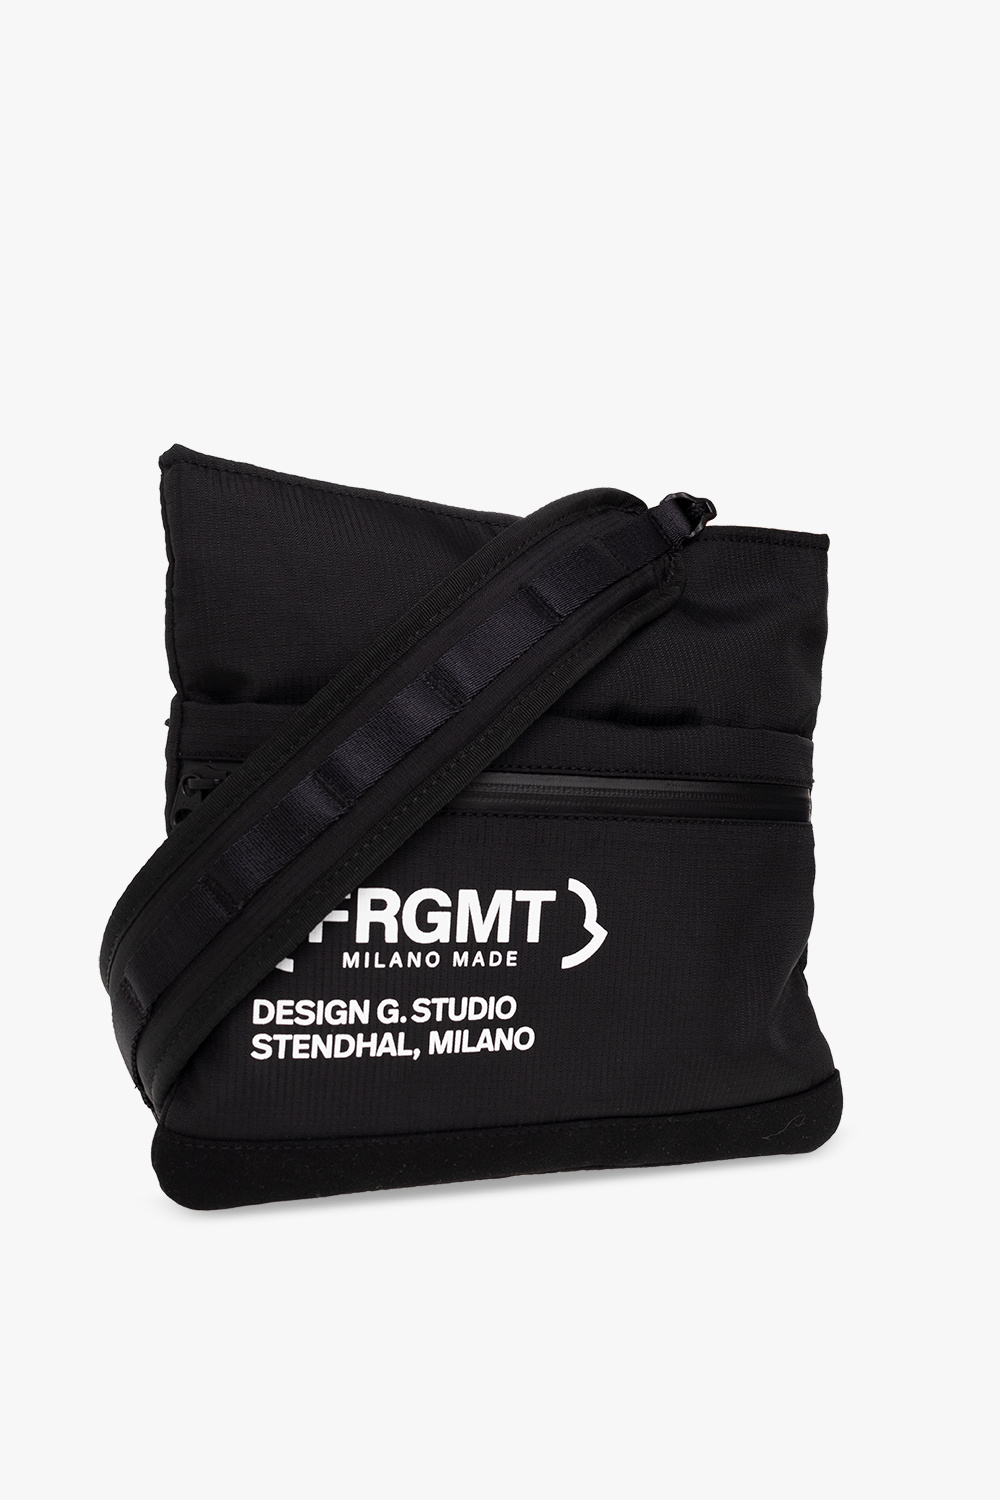 Moncler Genius 7 This black beltpack bag from